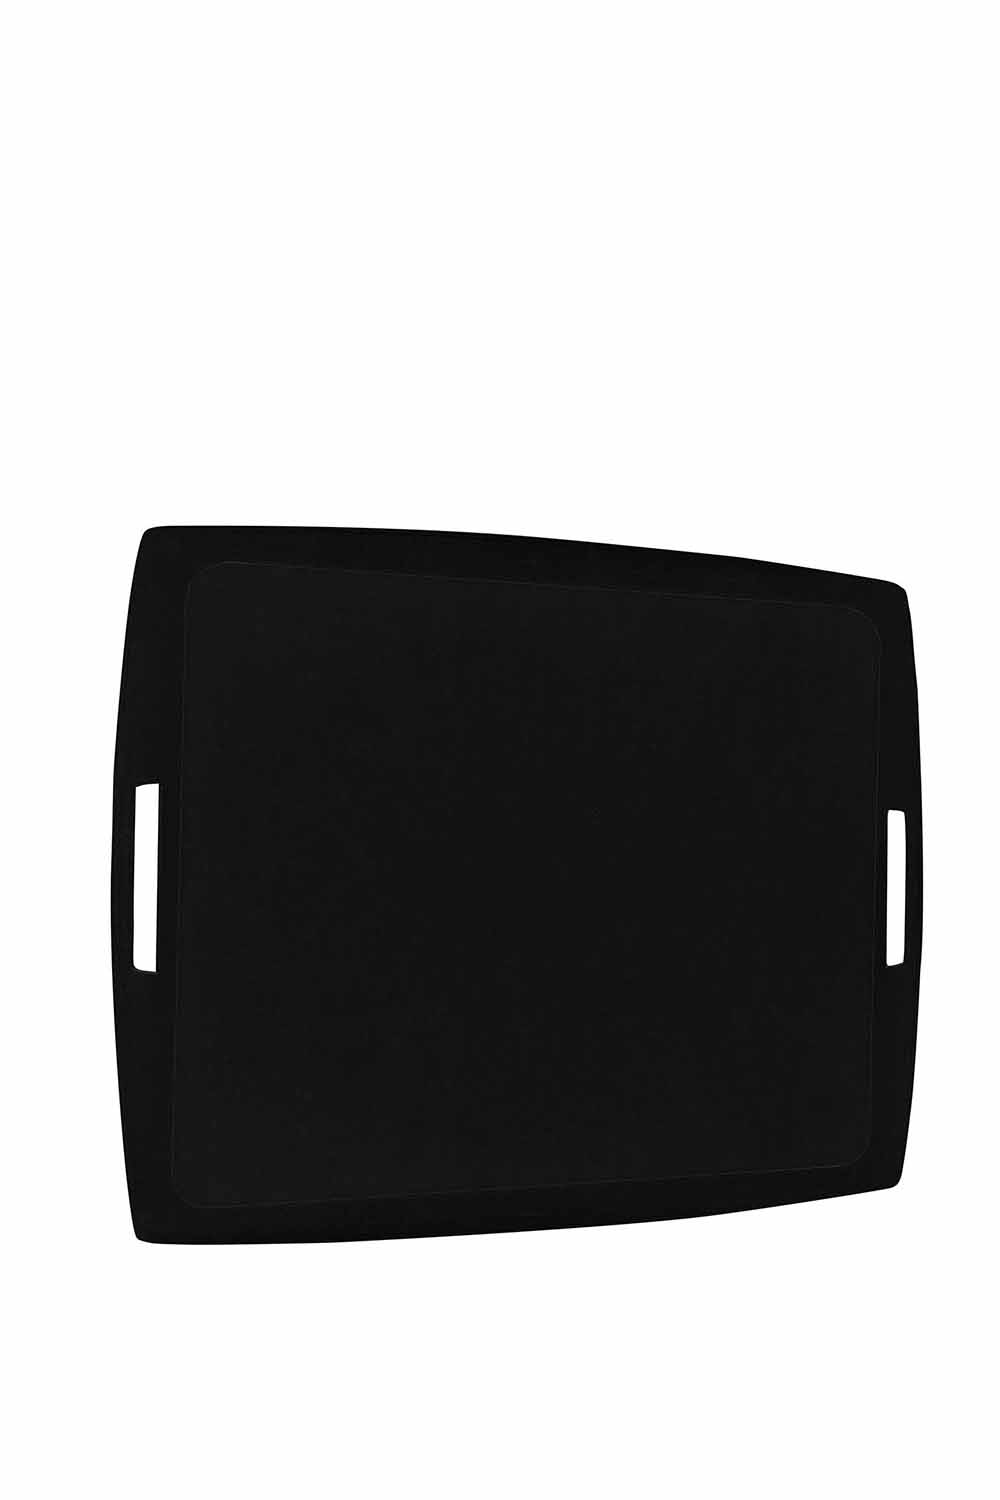 Linen Acrylic Tray, Noir, 54x43cm